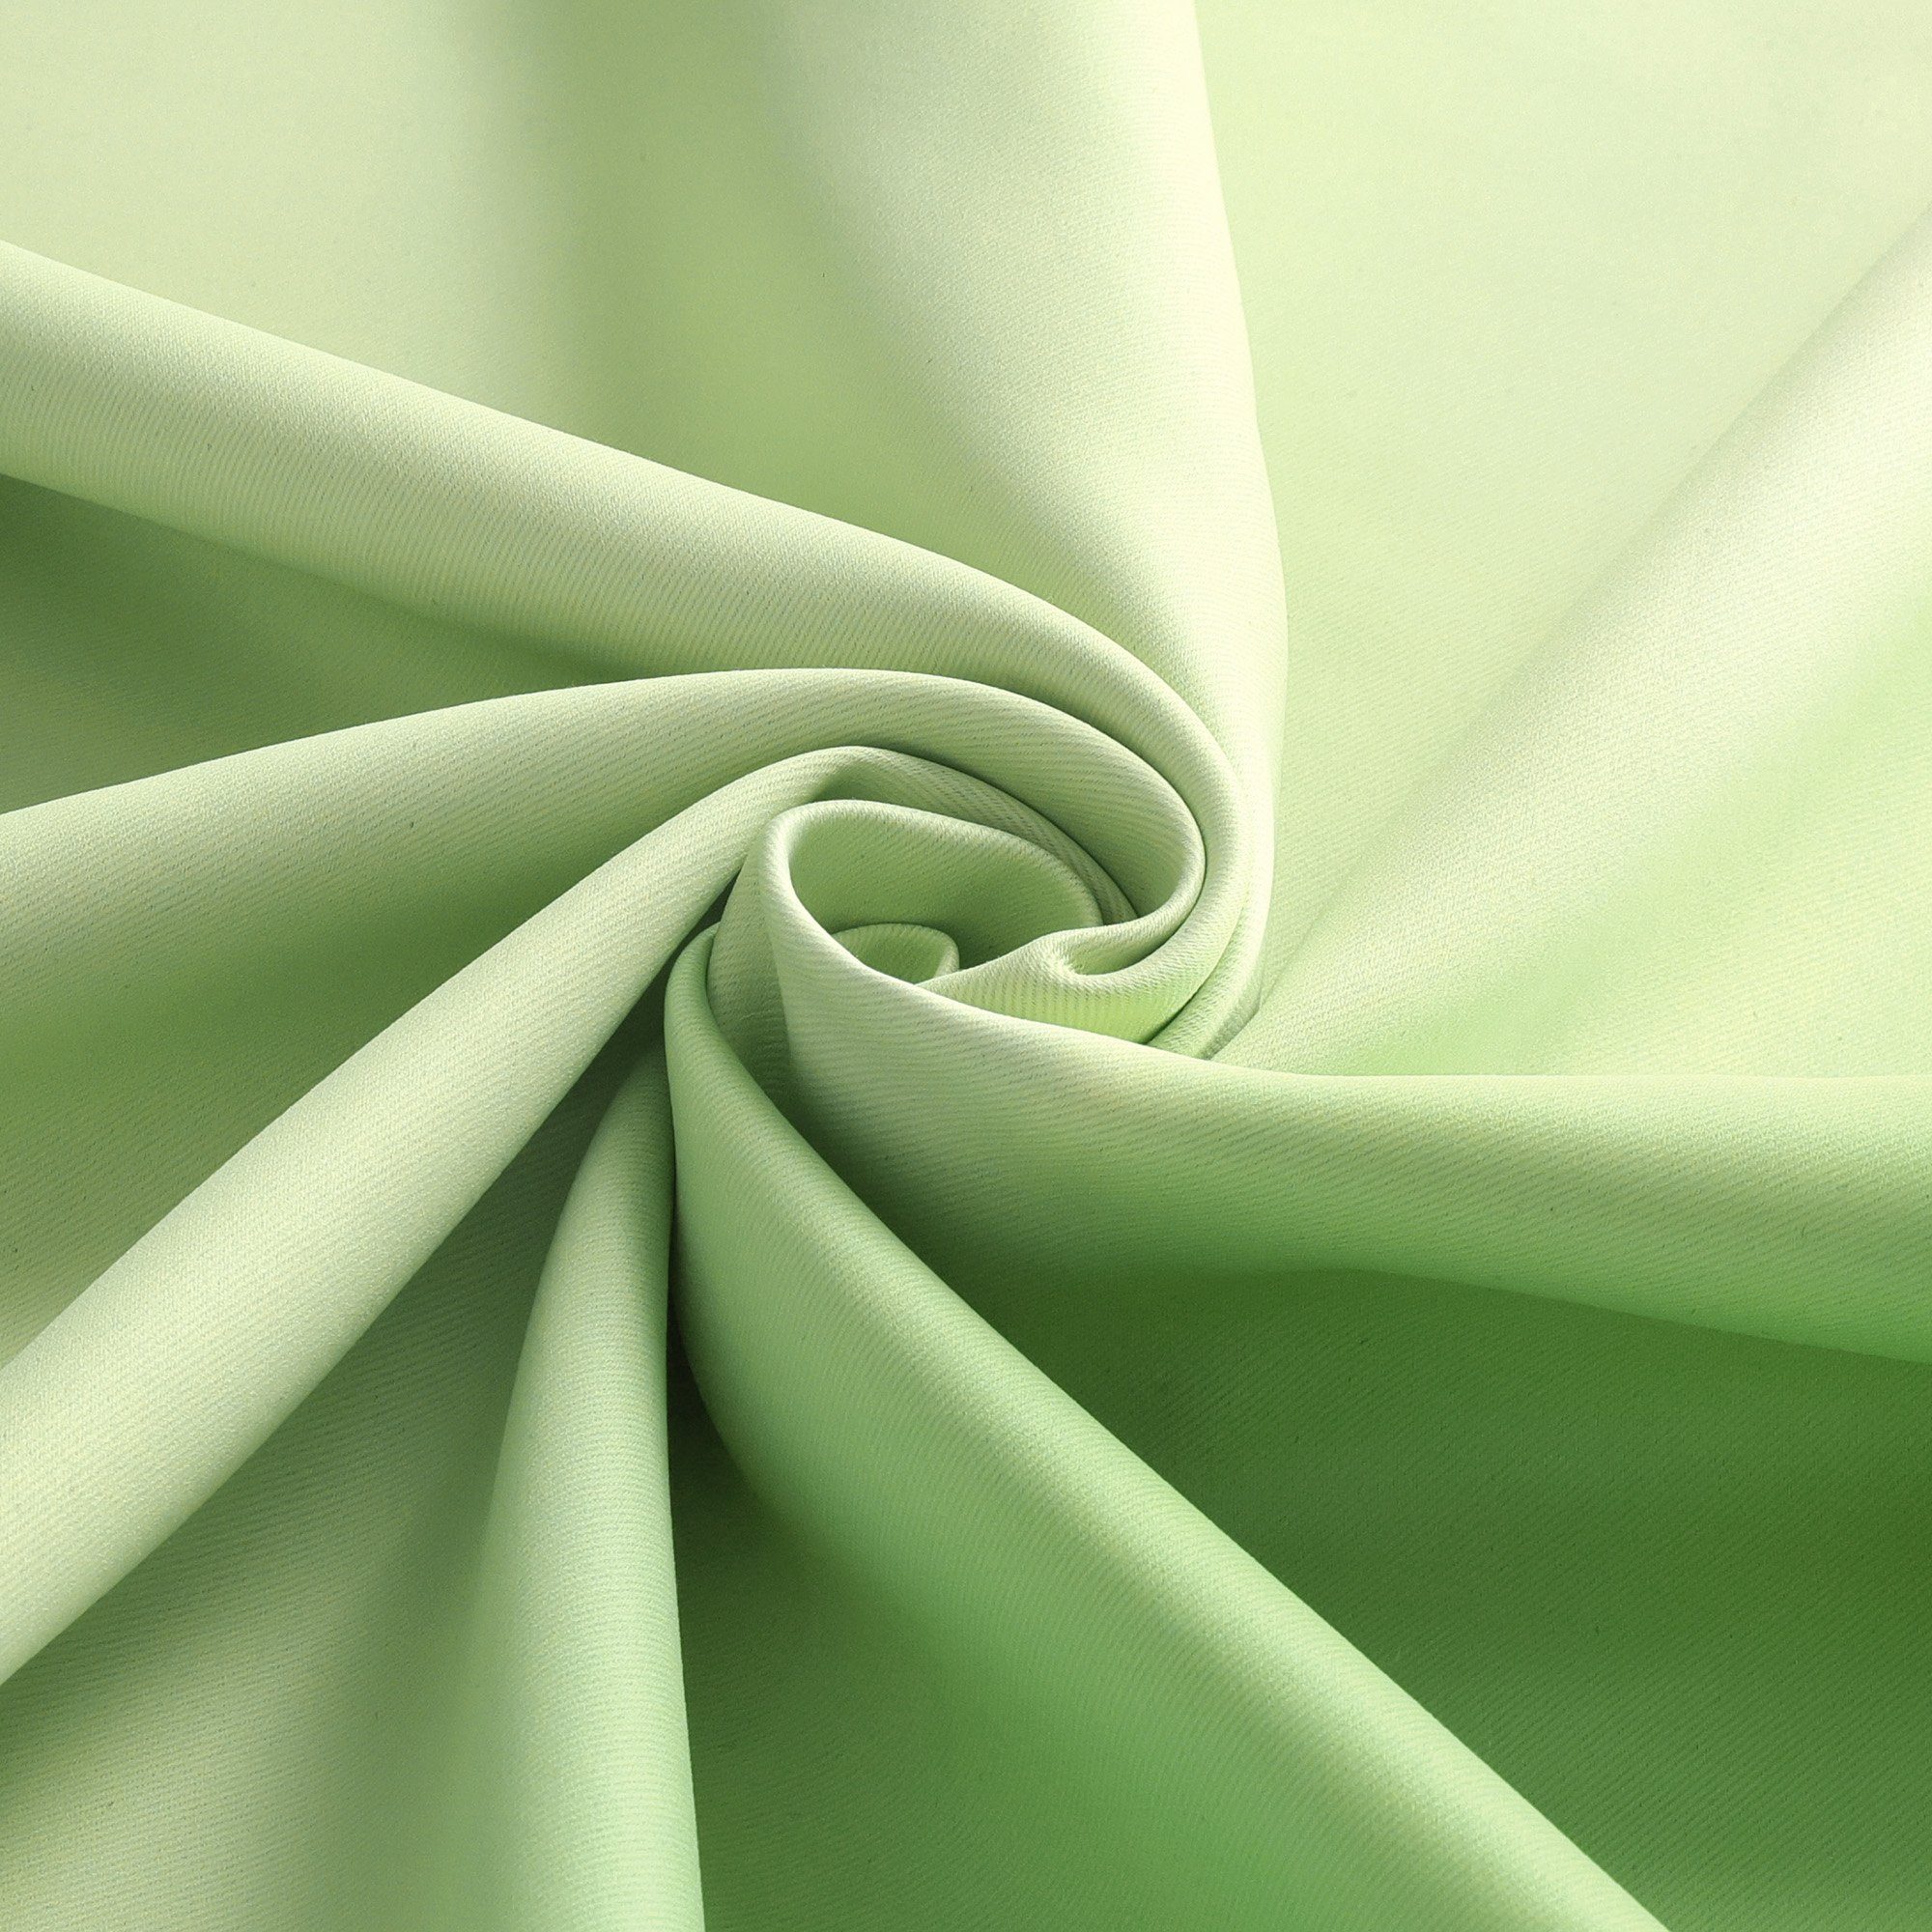 Vorhang, Joyswahl, Ösen (1 St), Tie-Dye Kunst blickdicht, grün